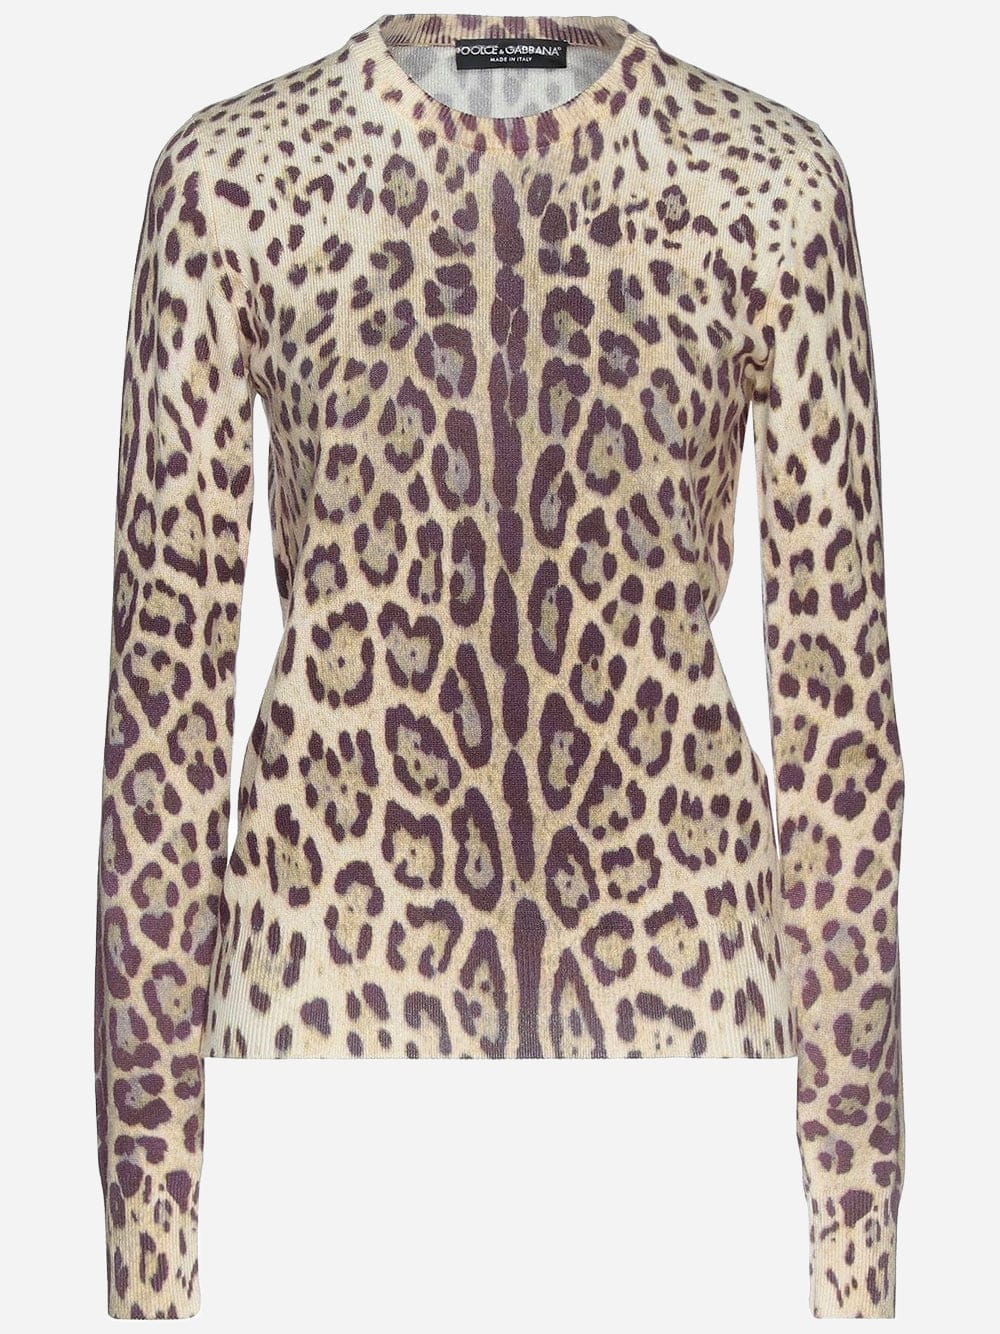 Dolce & Gabbana Leopard-Print Cashmere Sweater